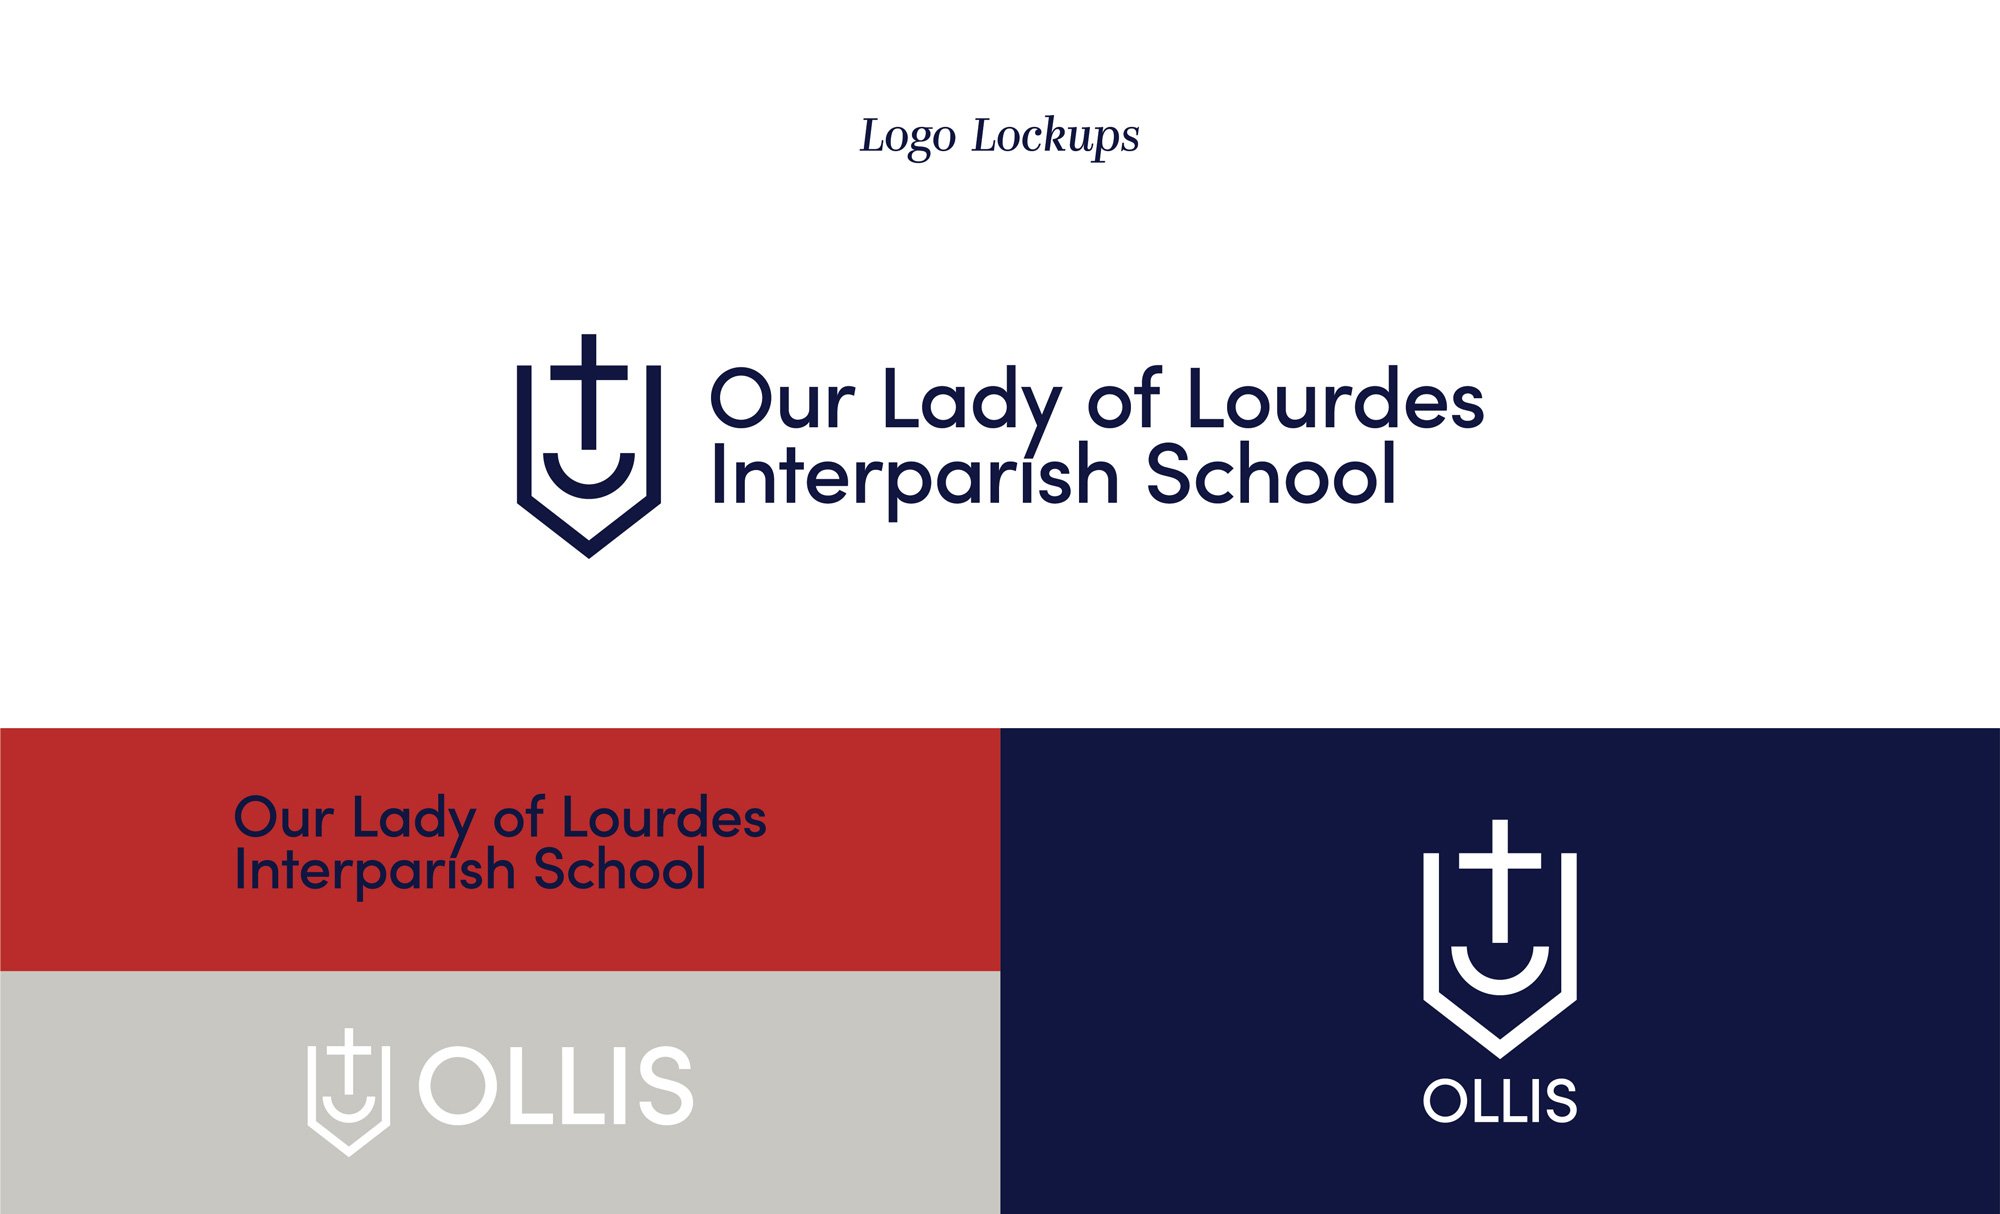  Catholic school rebrand logo lockups. 